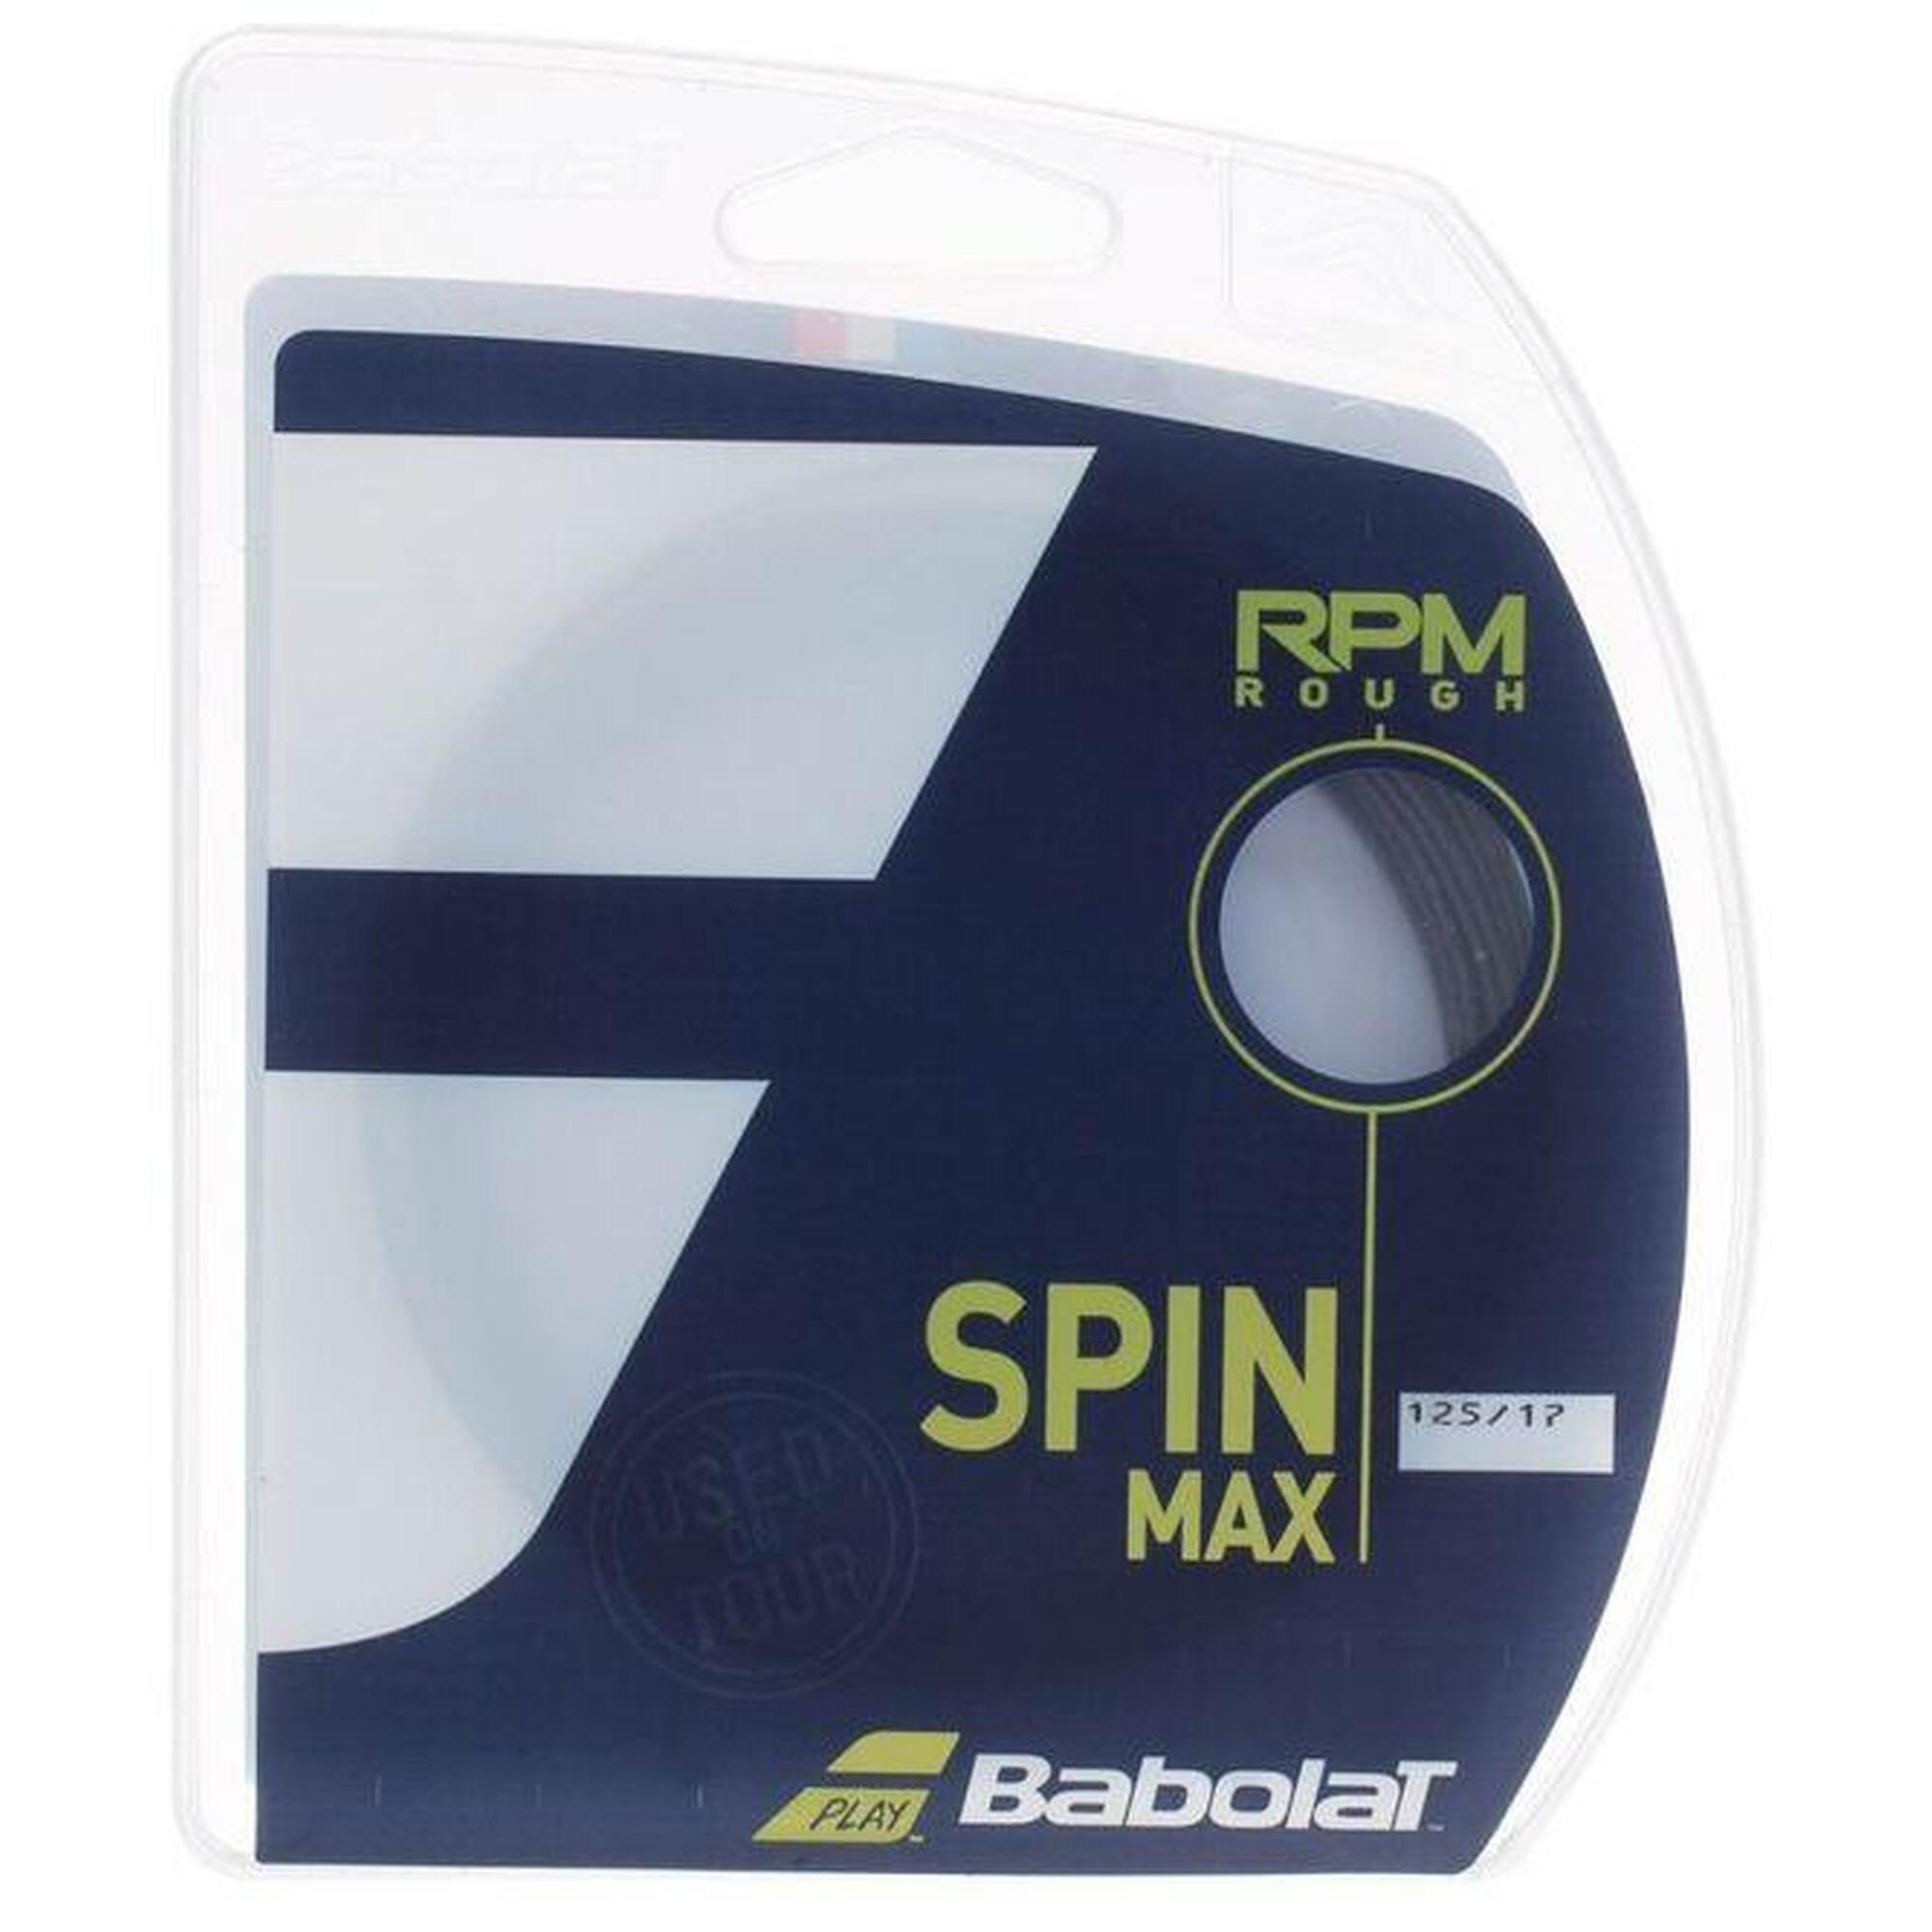 Naciąg tenisowy Babolat RPM Rough Spin Max set. 12 m 1,30 mm